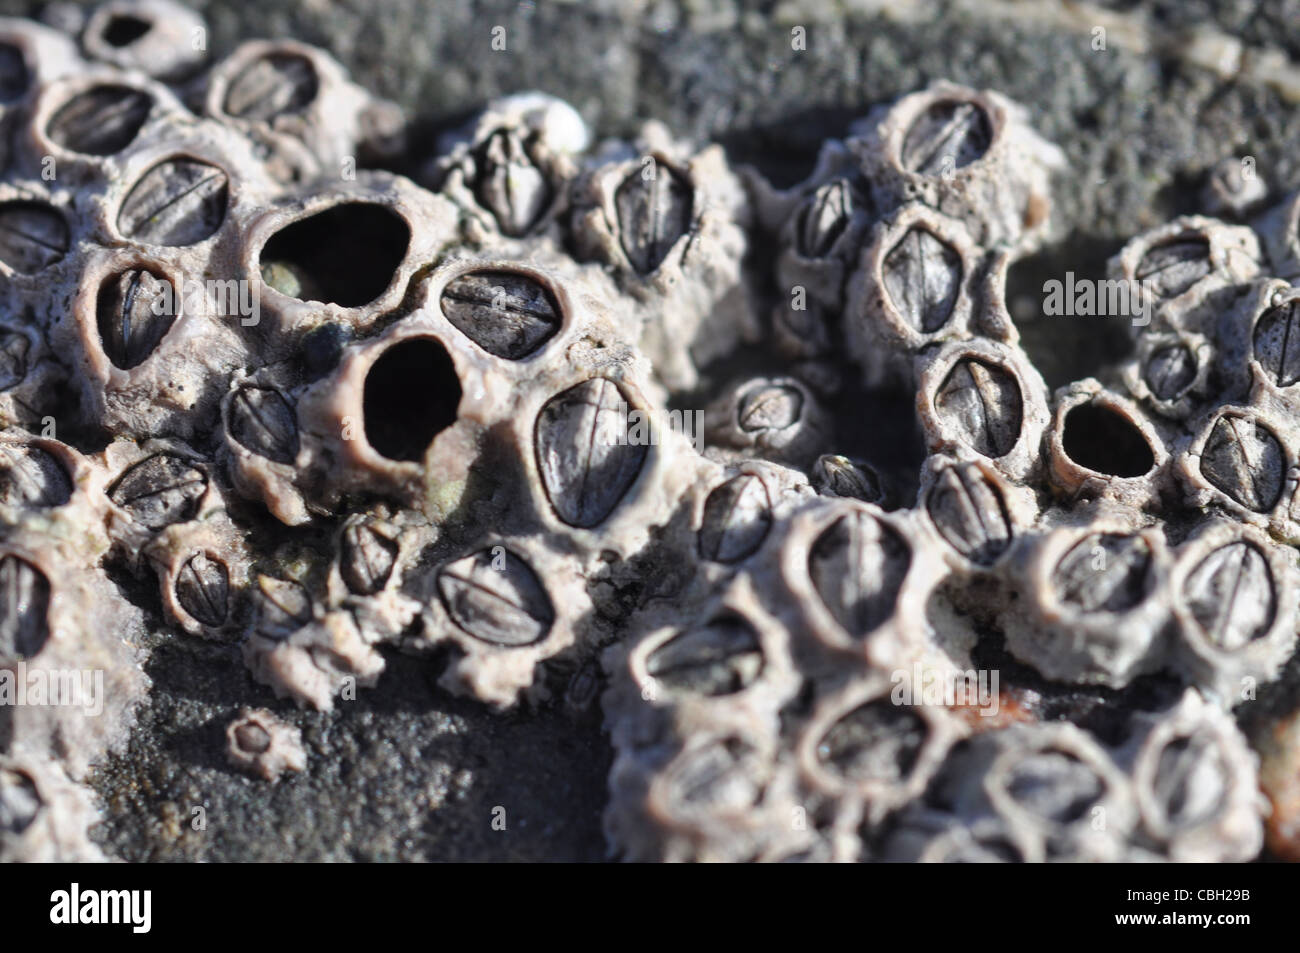 acron barnacles Stock Photo